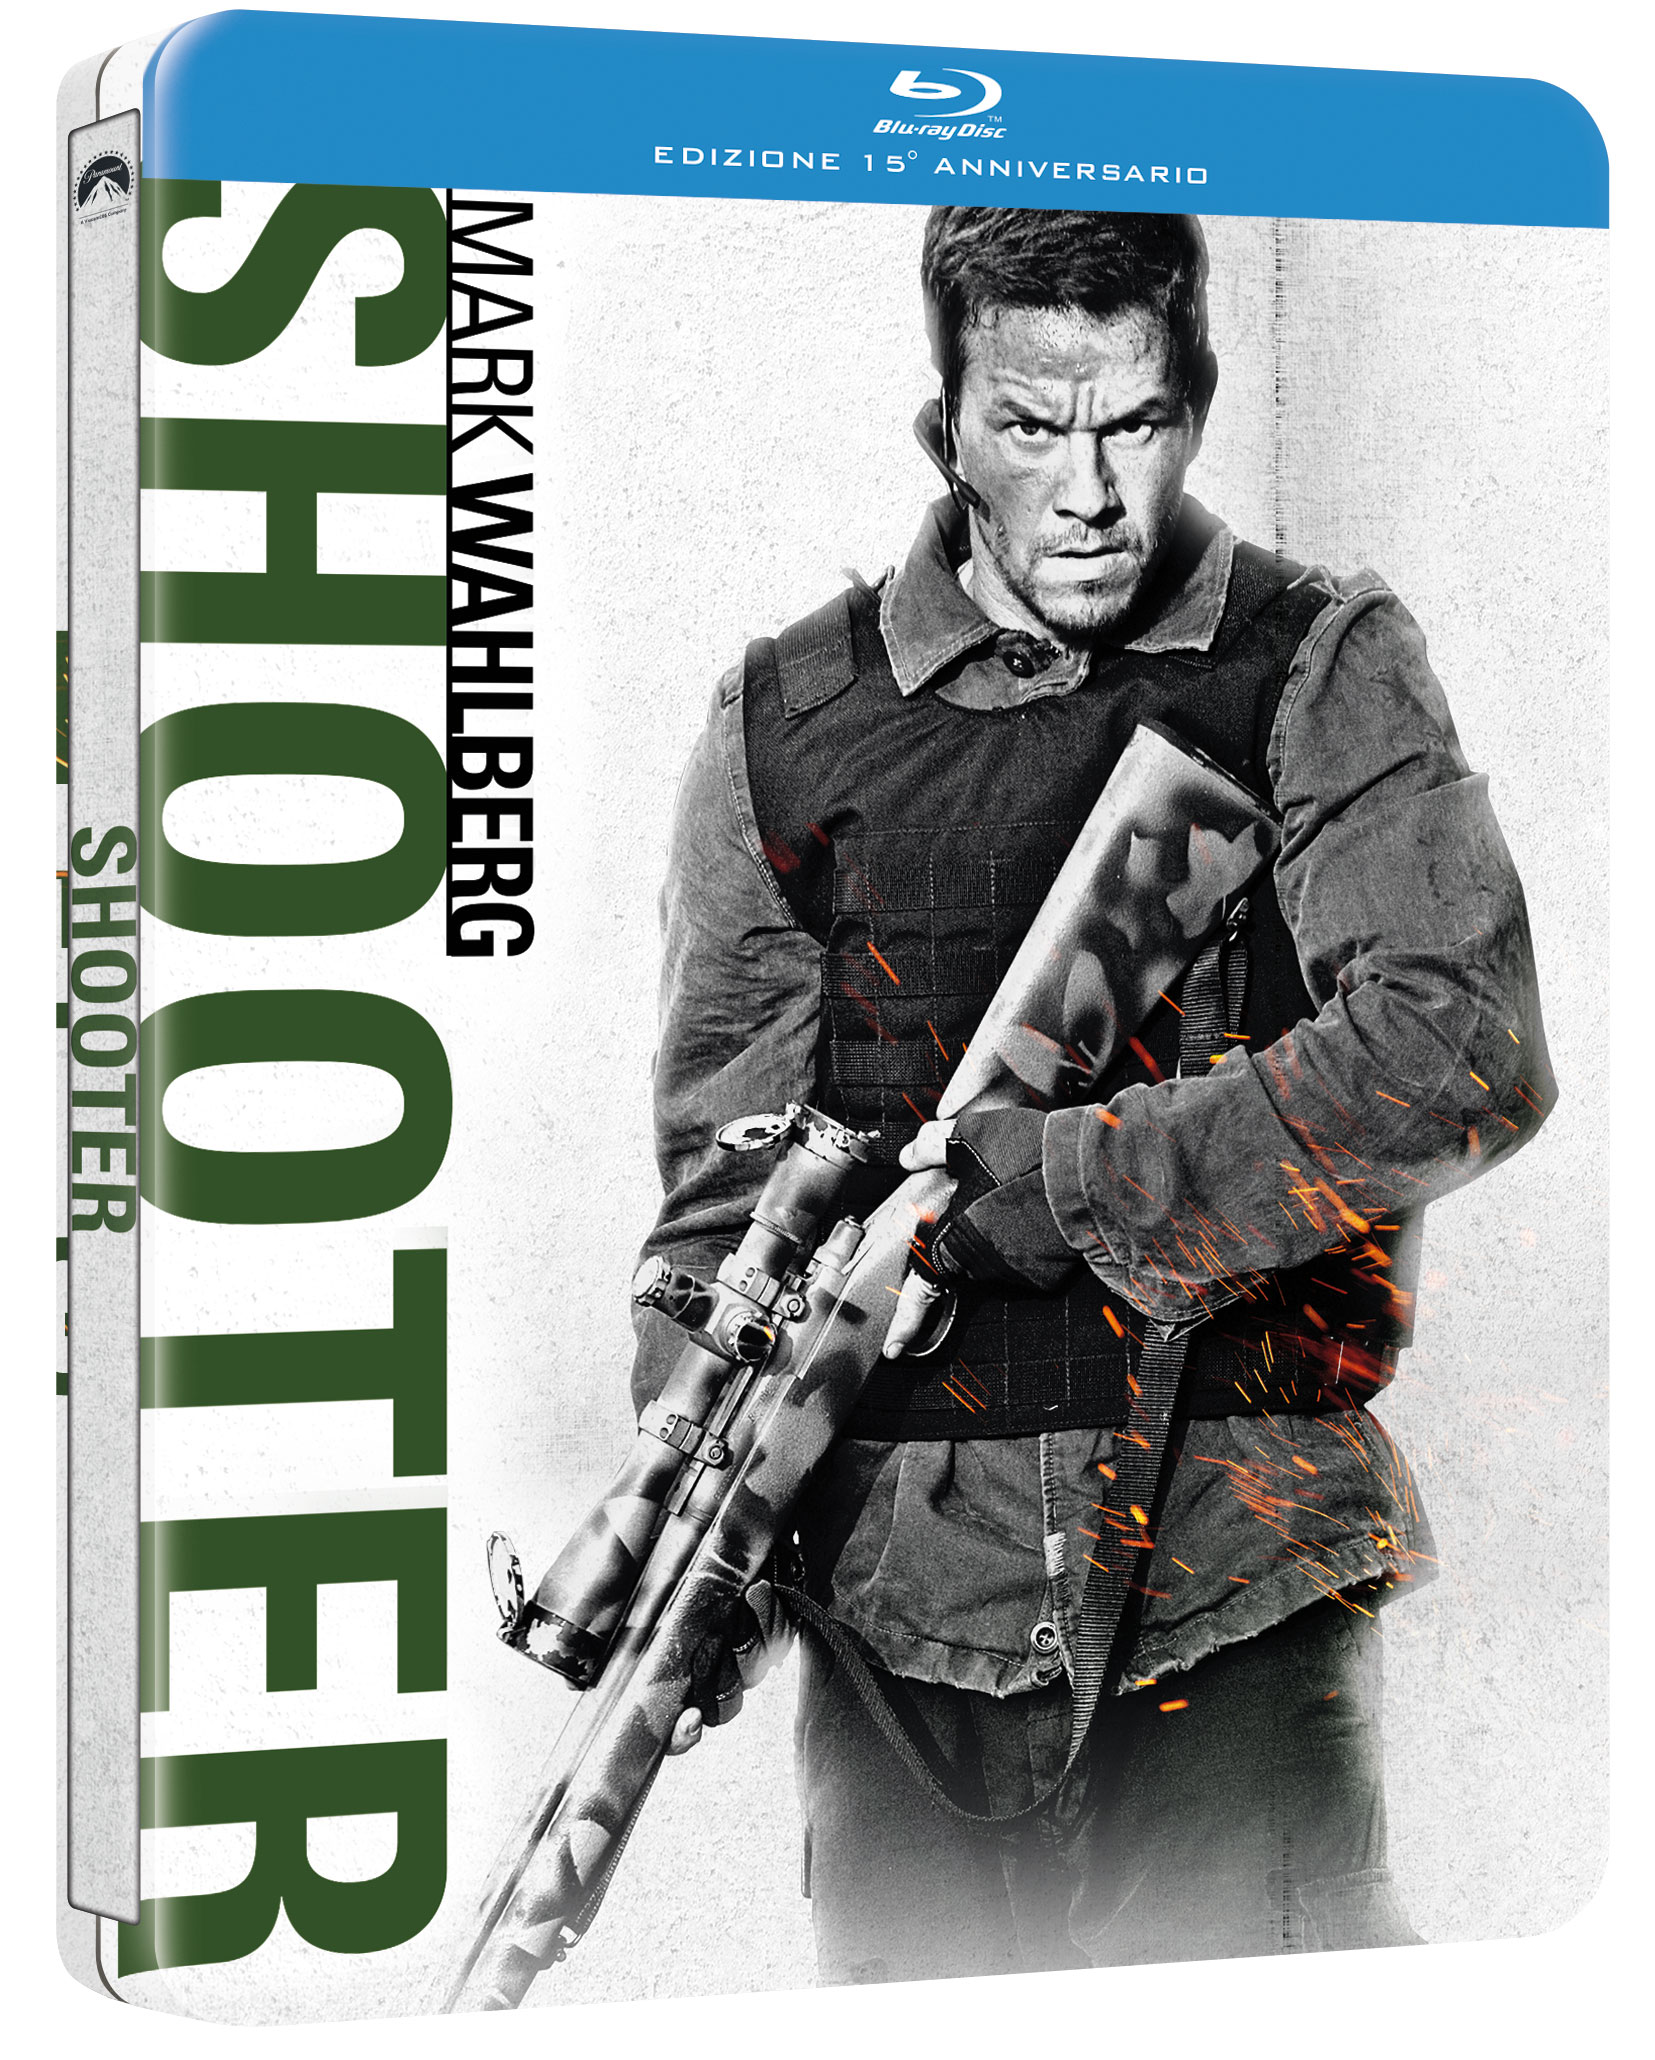 Shooter in Steelbook Blu-ray